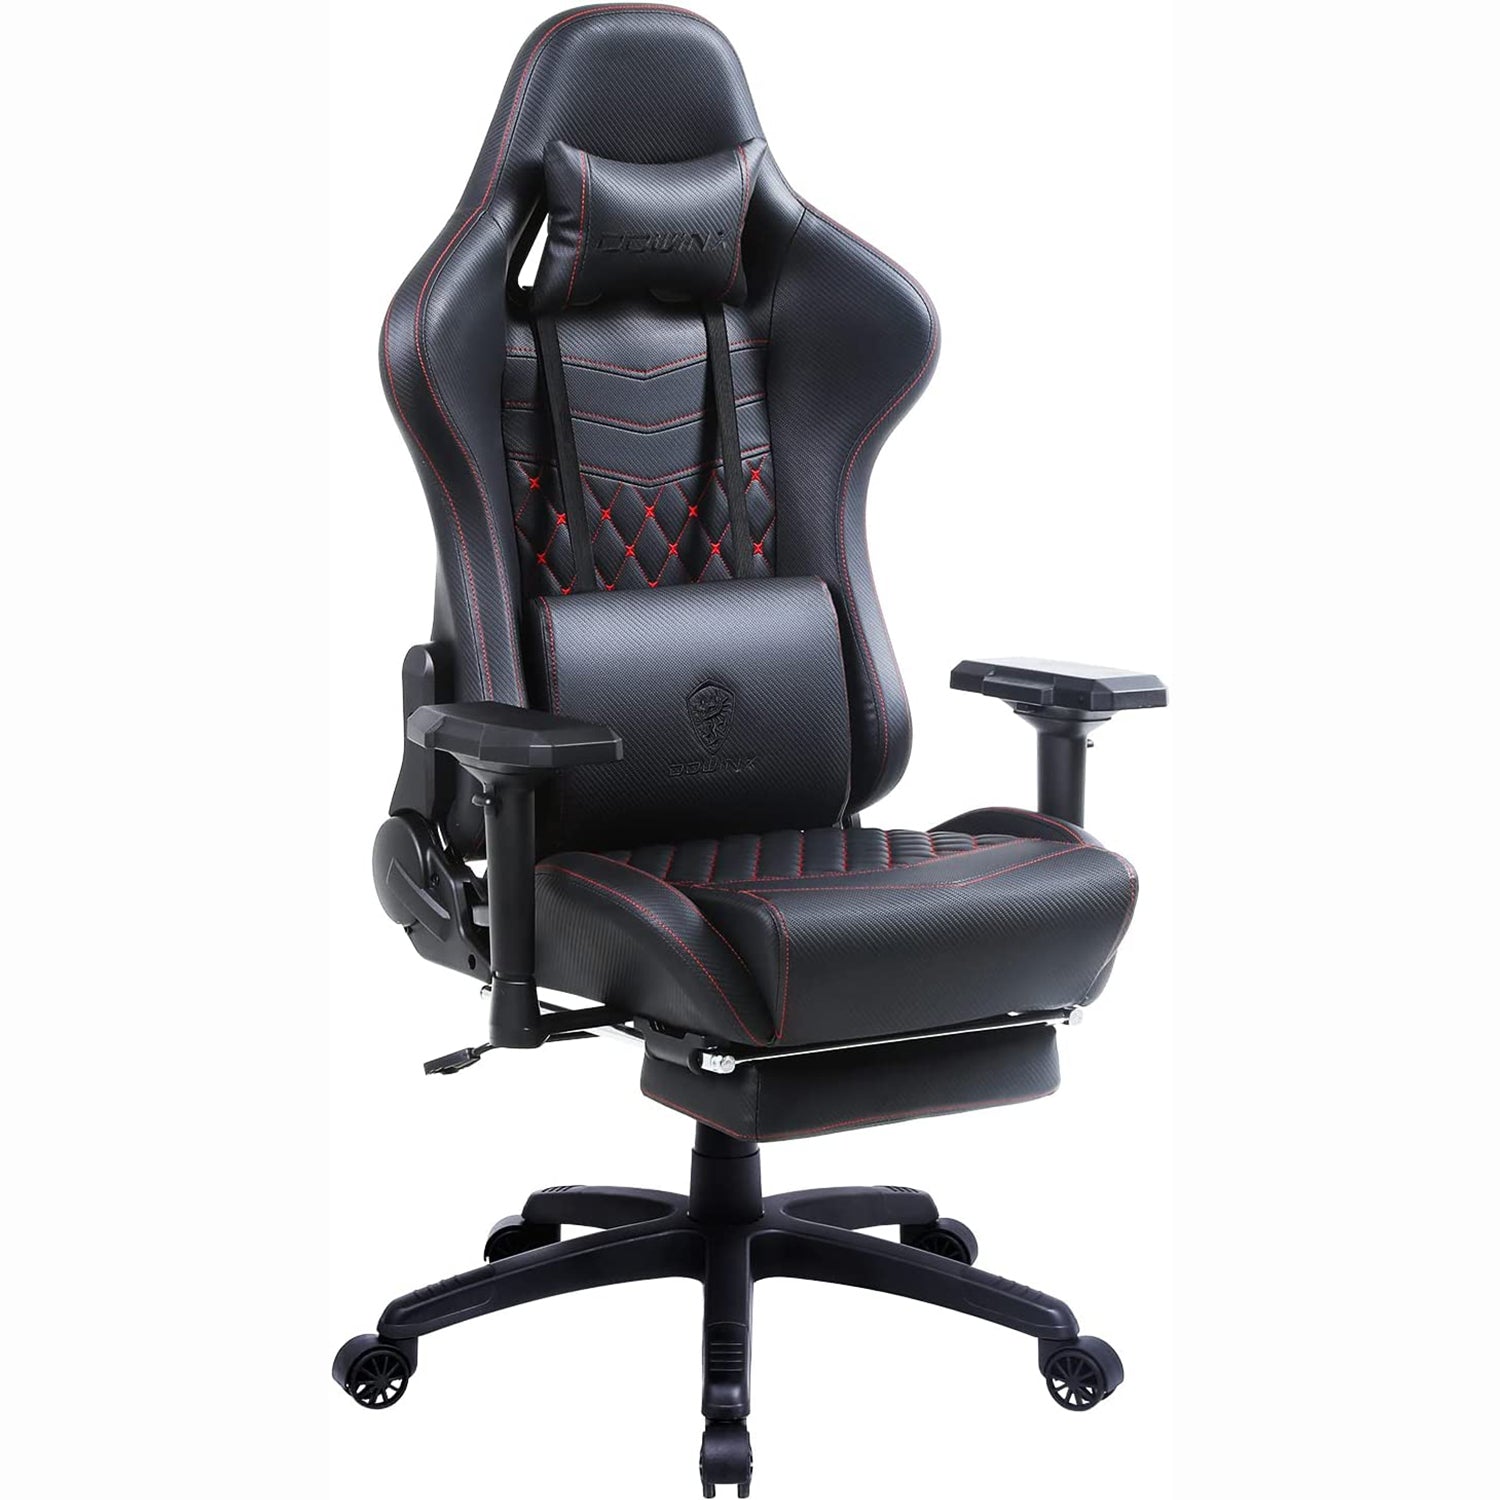 Dowinx Retro Series 6689S-Black-4D armrests